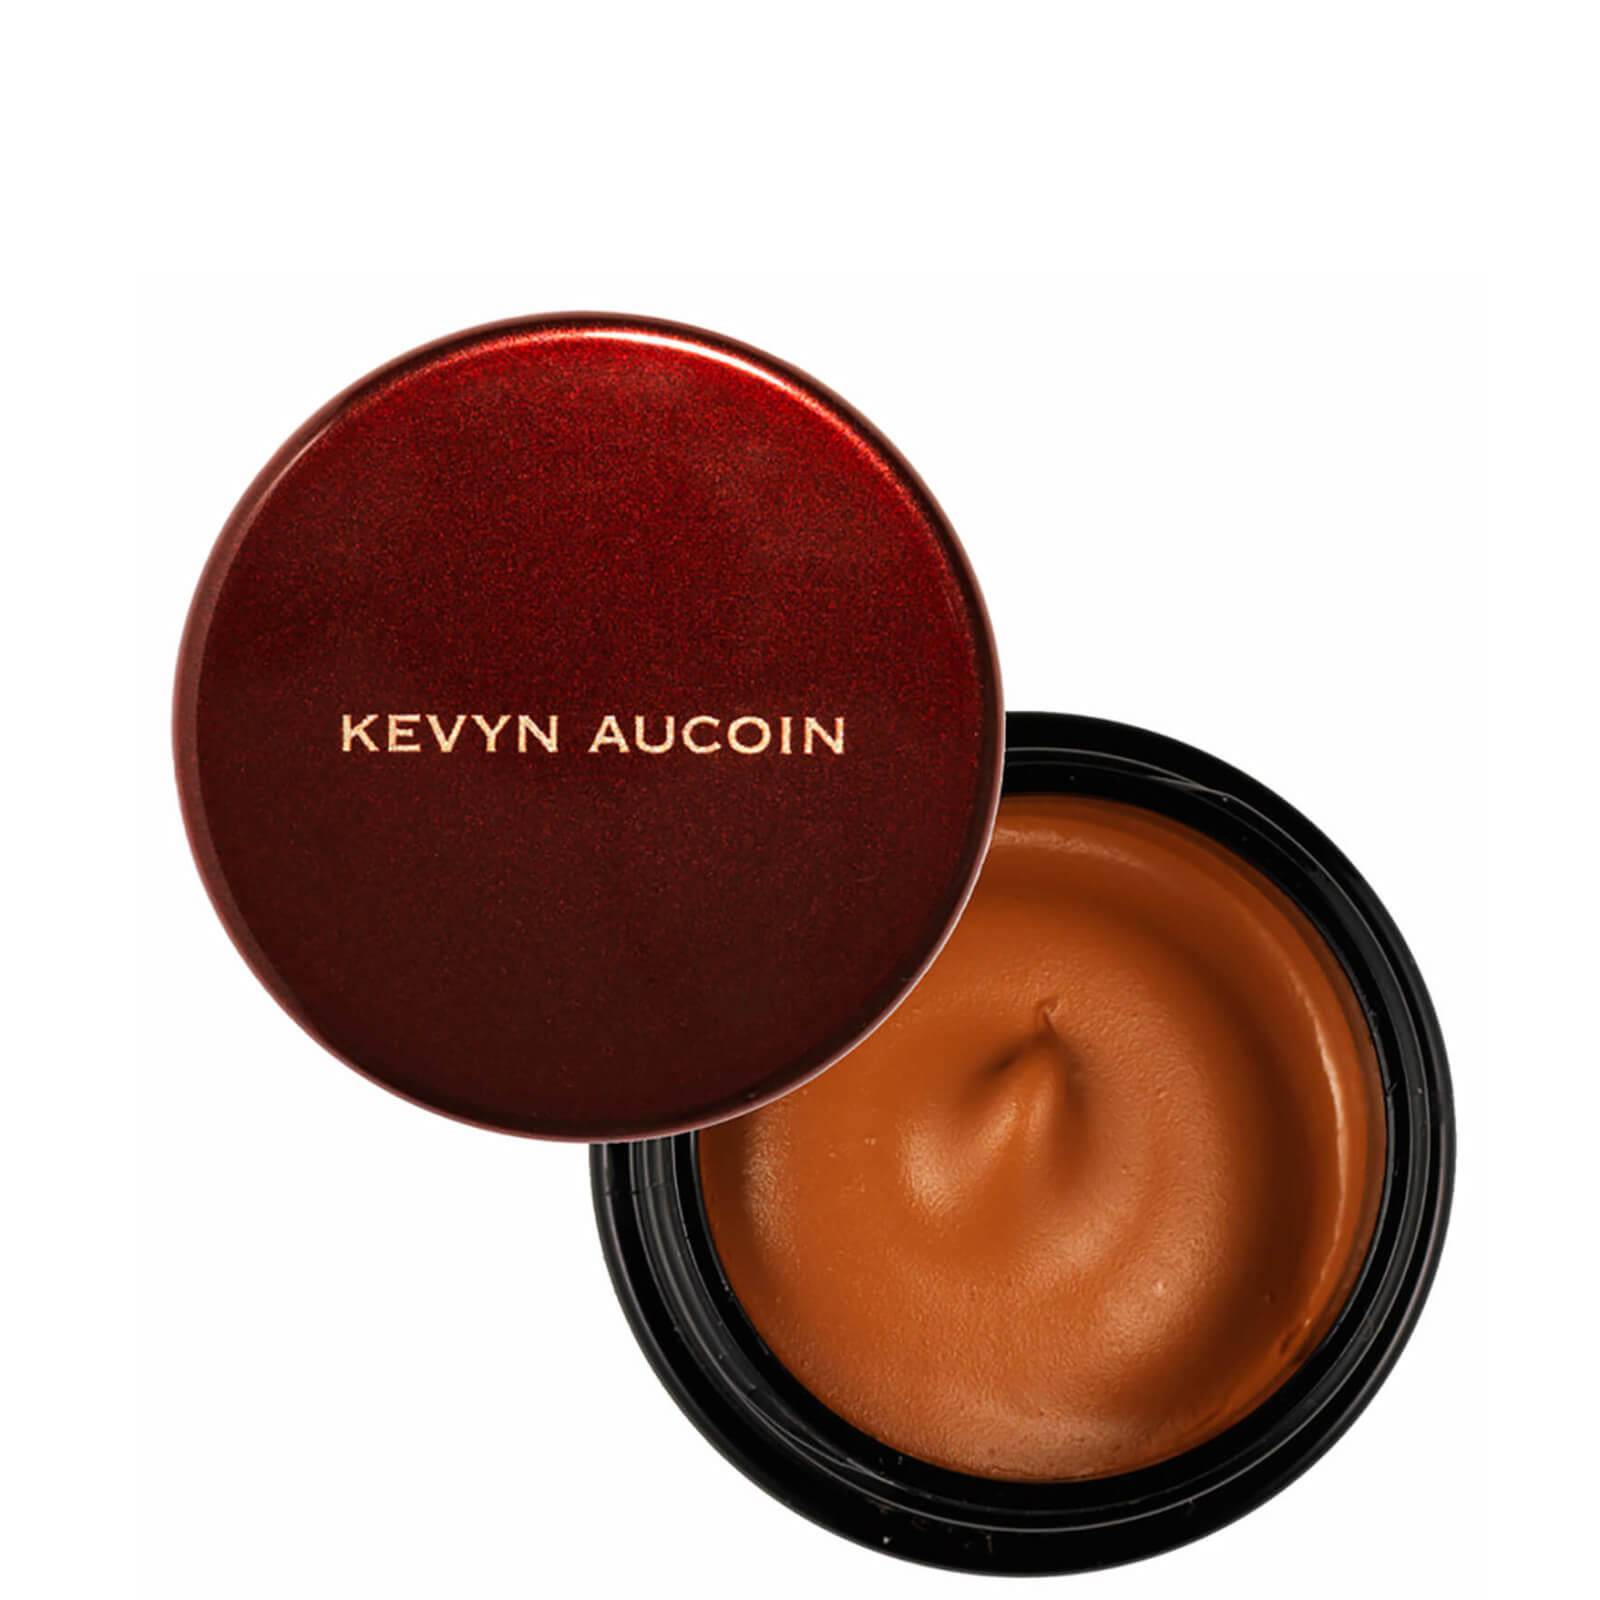 Kevyn Aucoin The Sensual Skin Enhancer (Various Shades) – SX 13 lookfantastic.com imagine